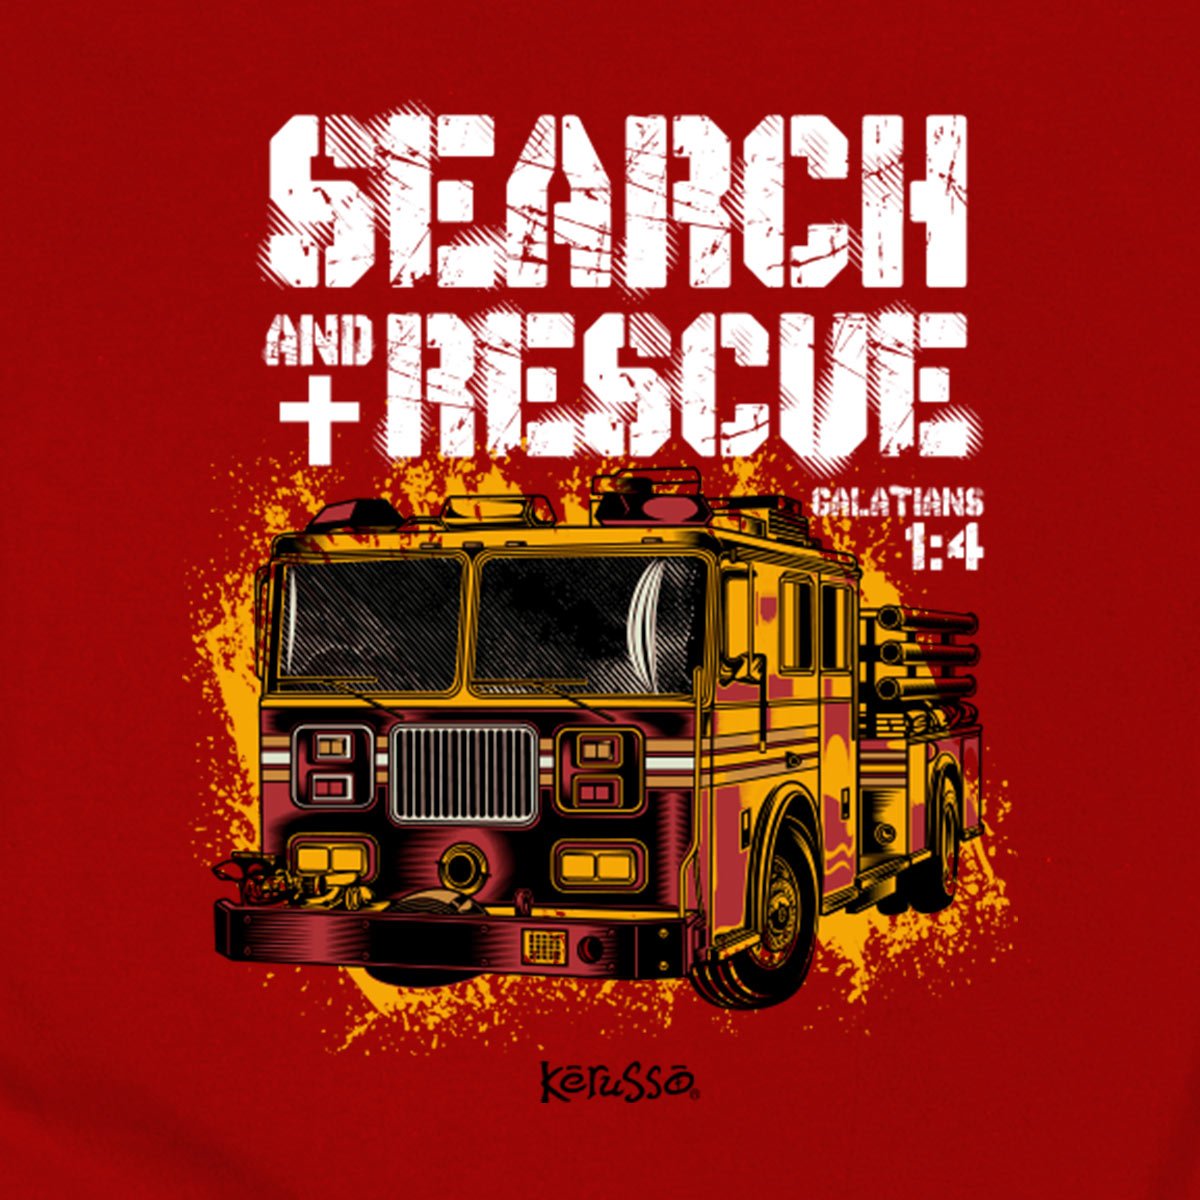 Kerusso Kids T-Shirt Search & Rescue | 2FruitBearers